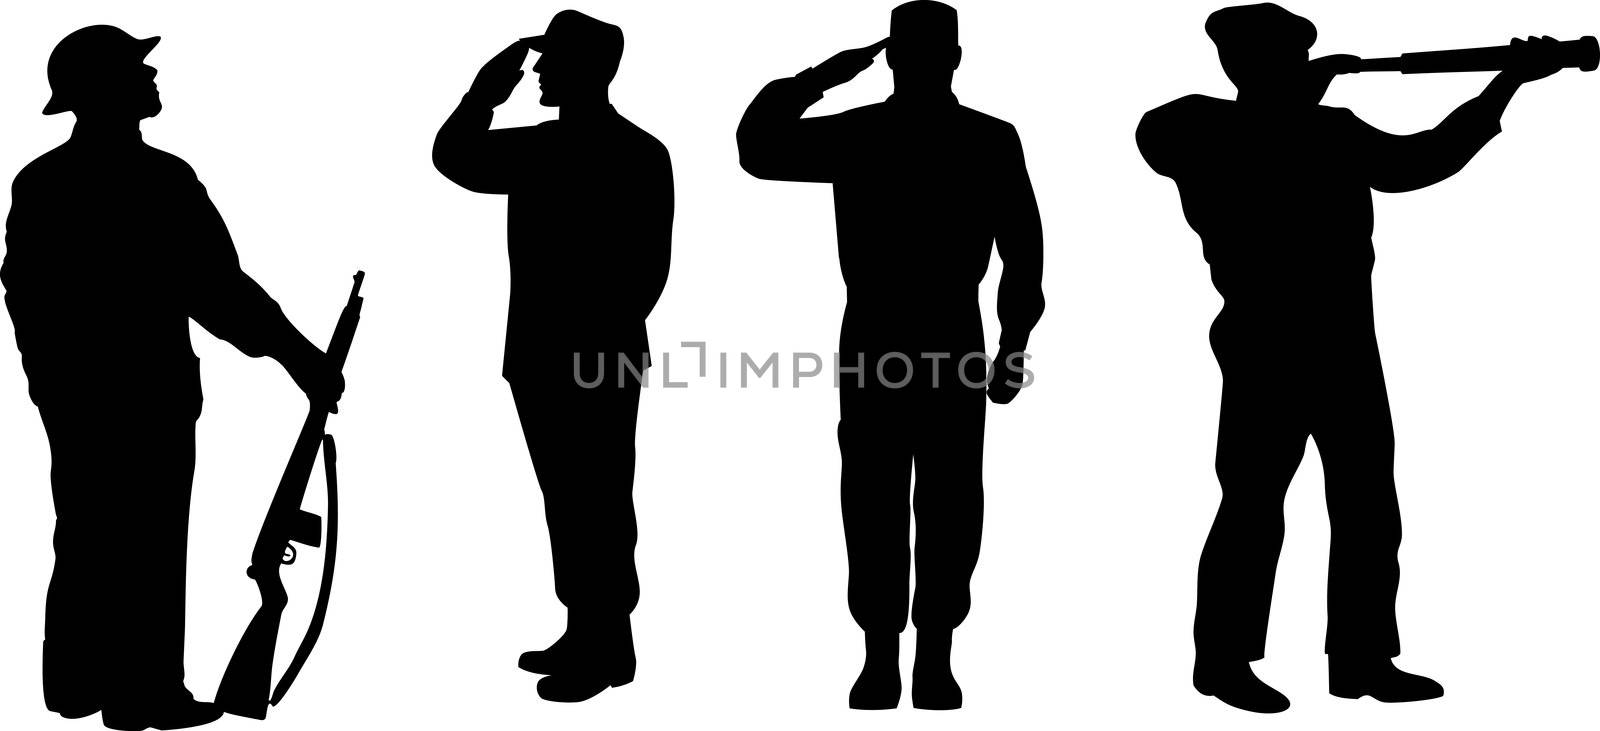 soldier silhouettes  by patrimonio